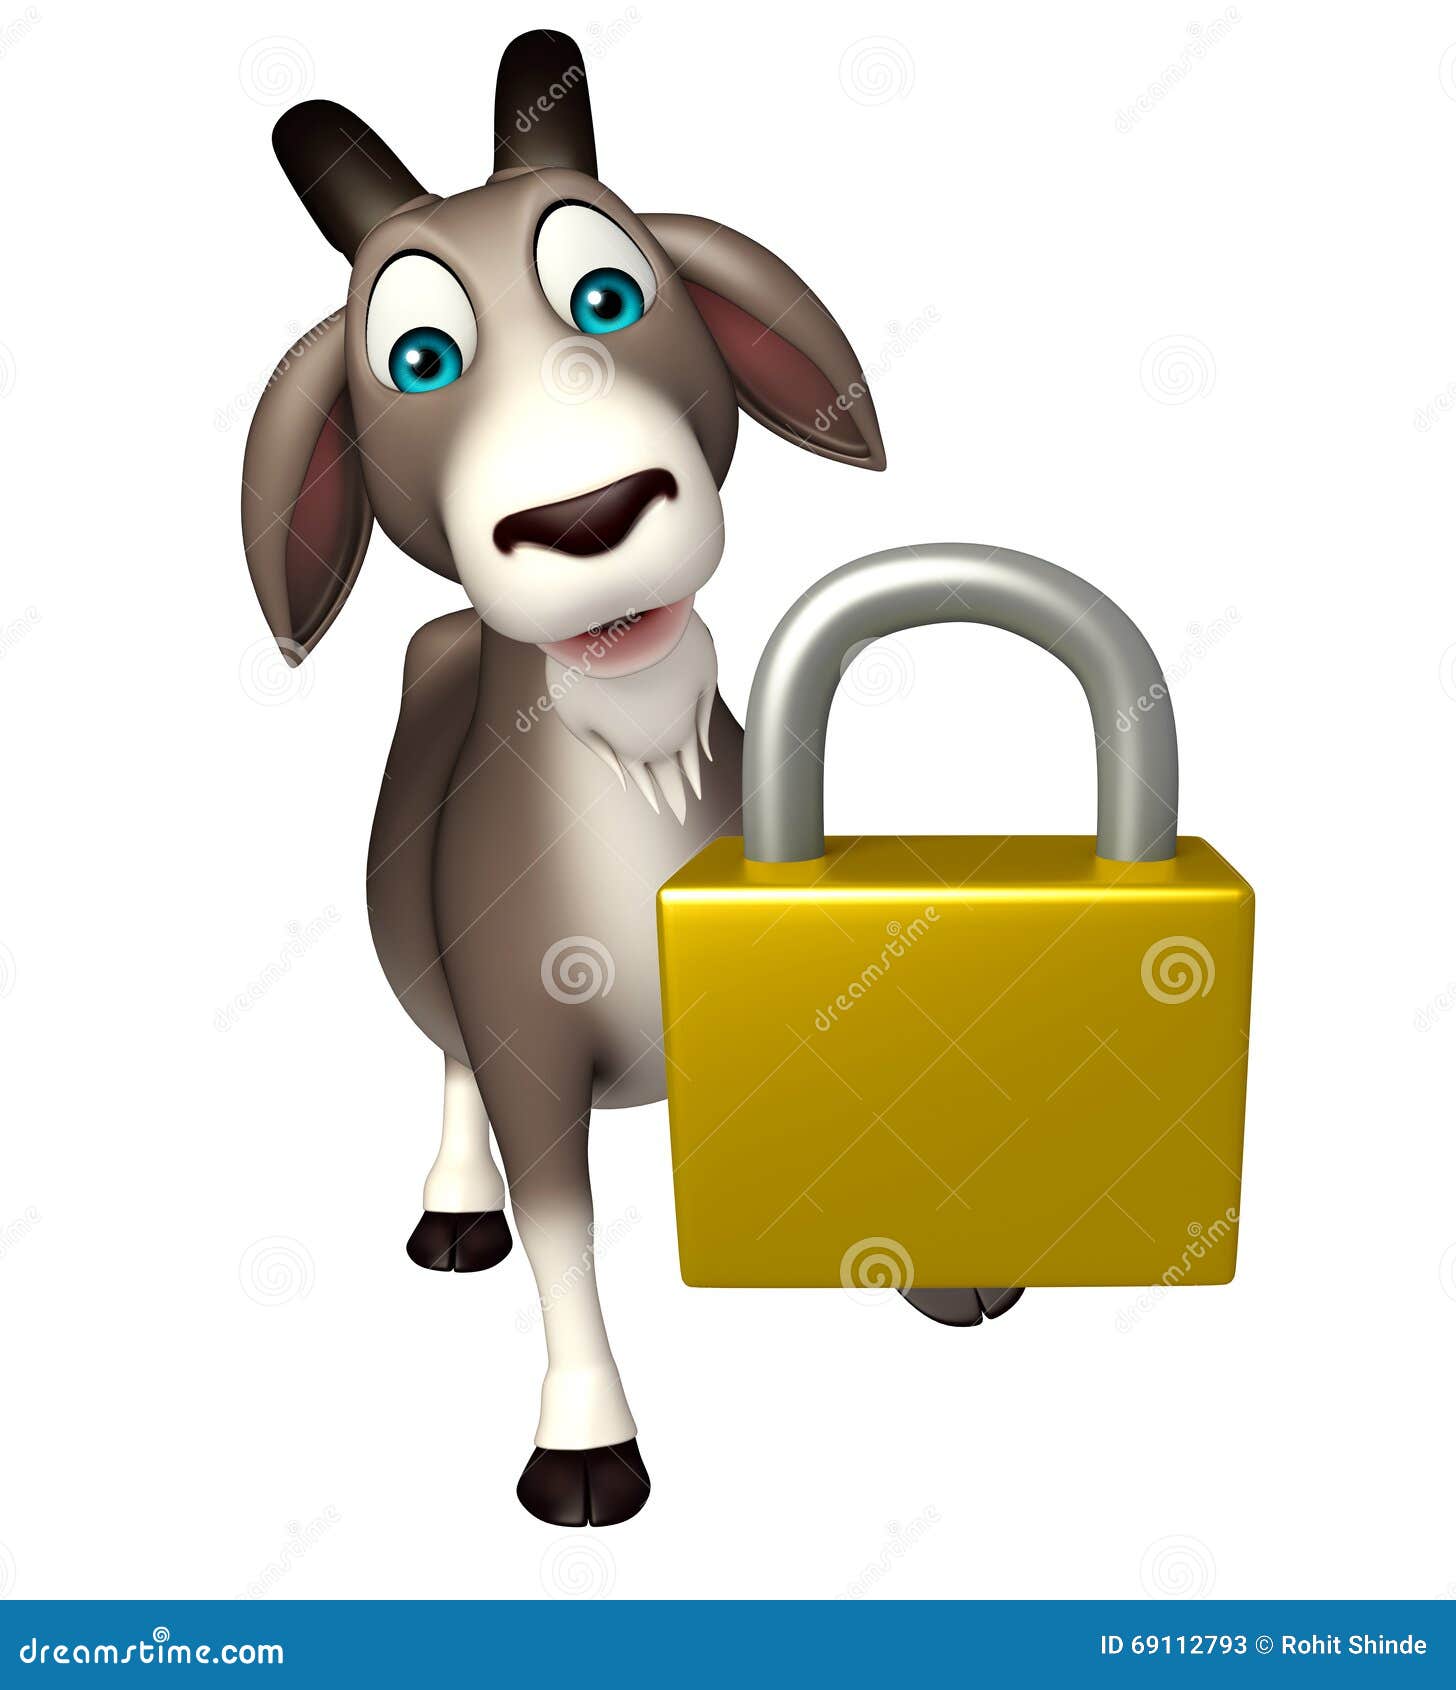 Image result for goat lock